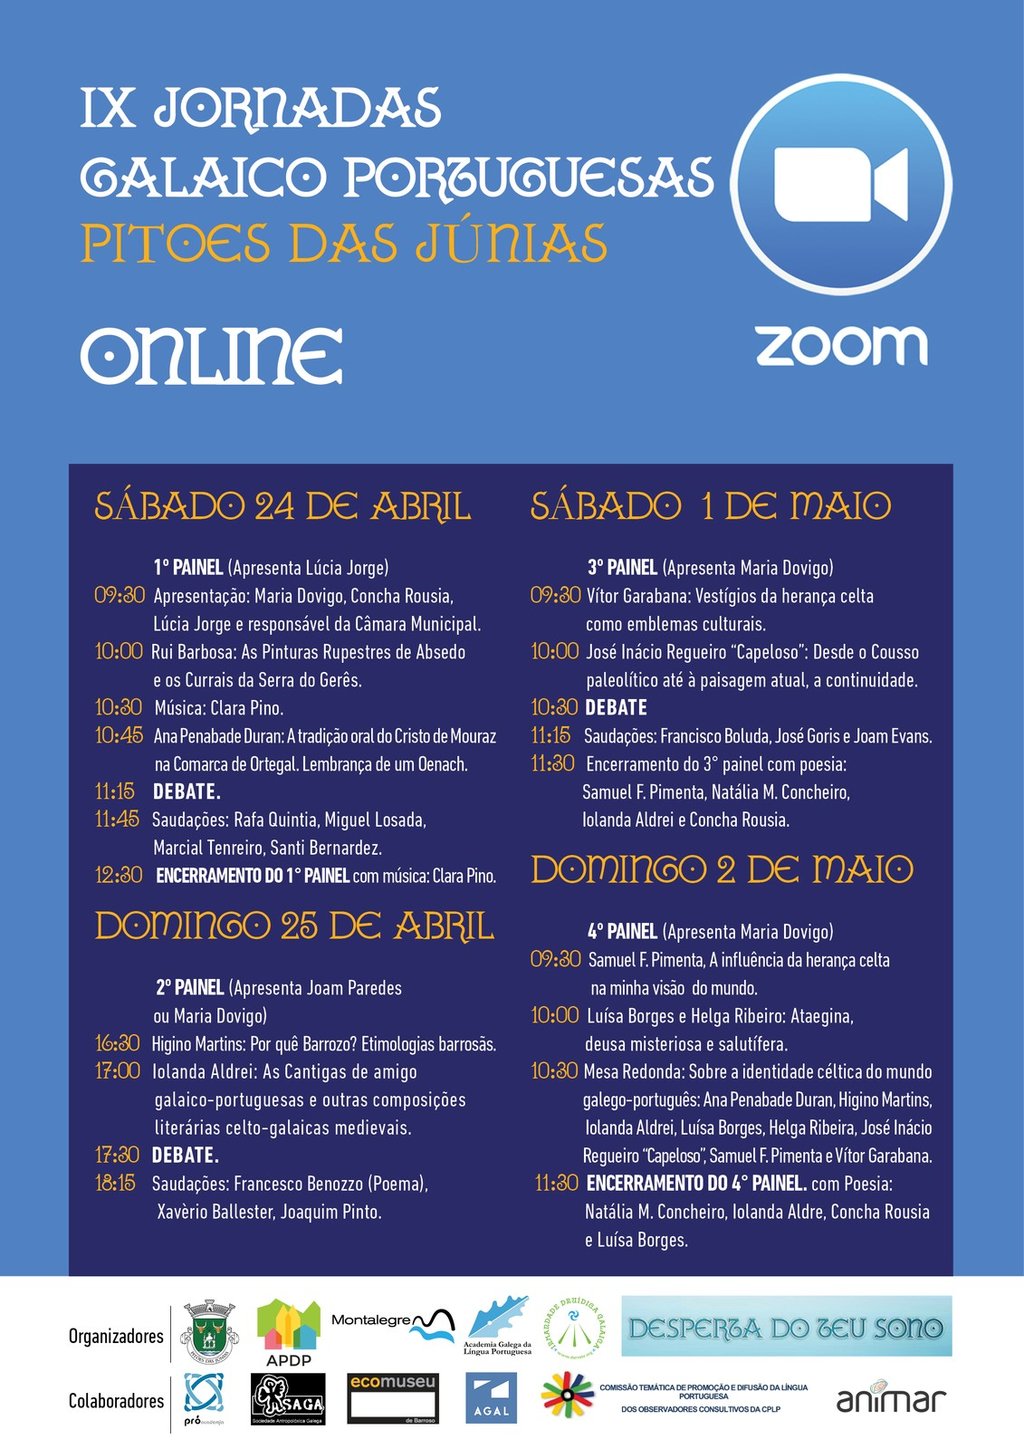 Pitoes das junias   ix jornadas galaico portuguesas  programa   oficial  1 1024 2500